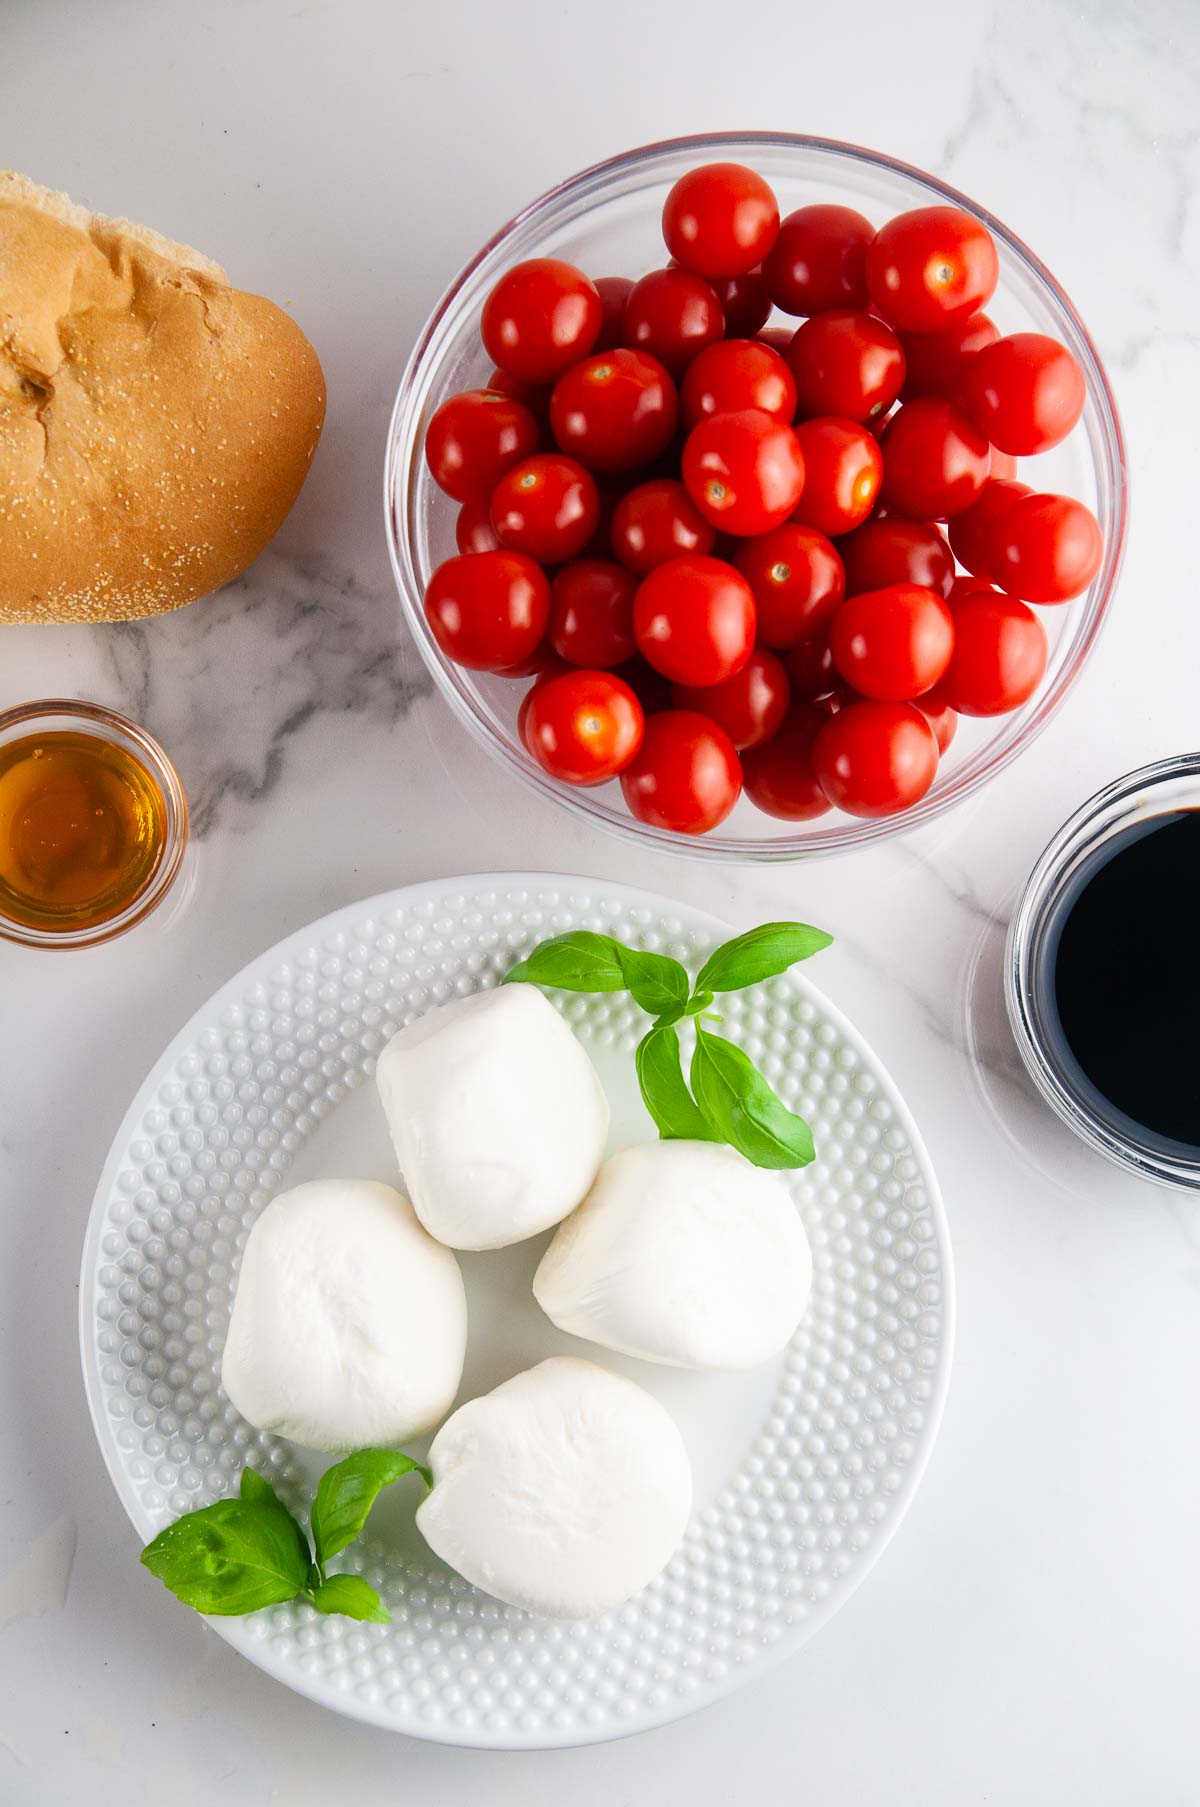 Ingredients for Buratta Panzanella Salad: Tomatoes, Burrata, Bread, Balsamic, Honey, and Basil